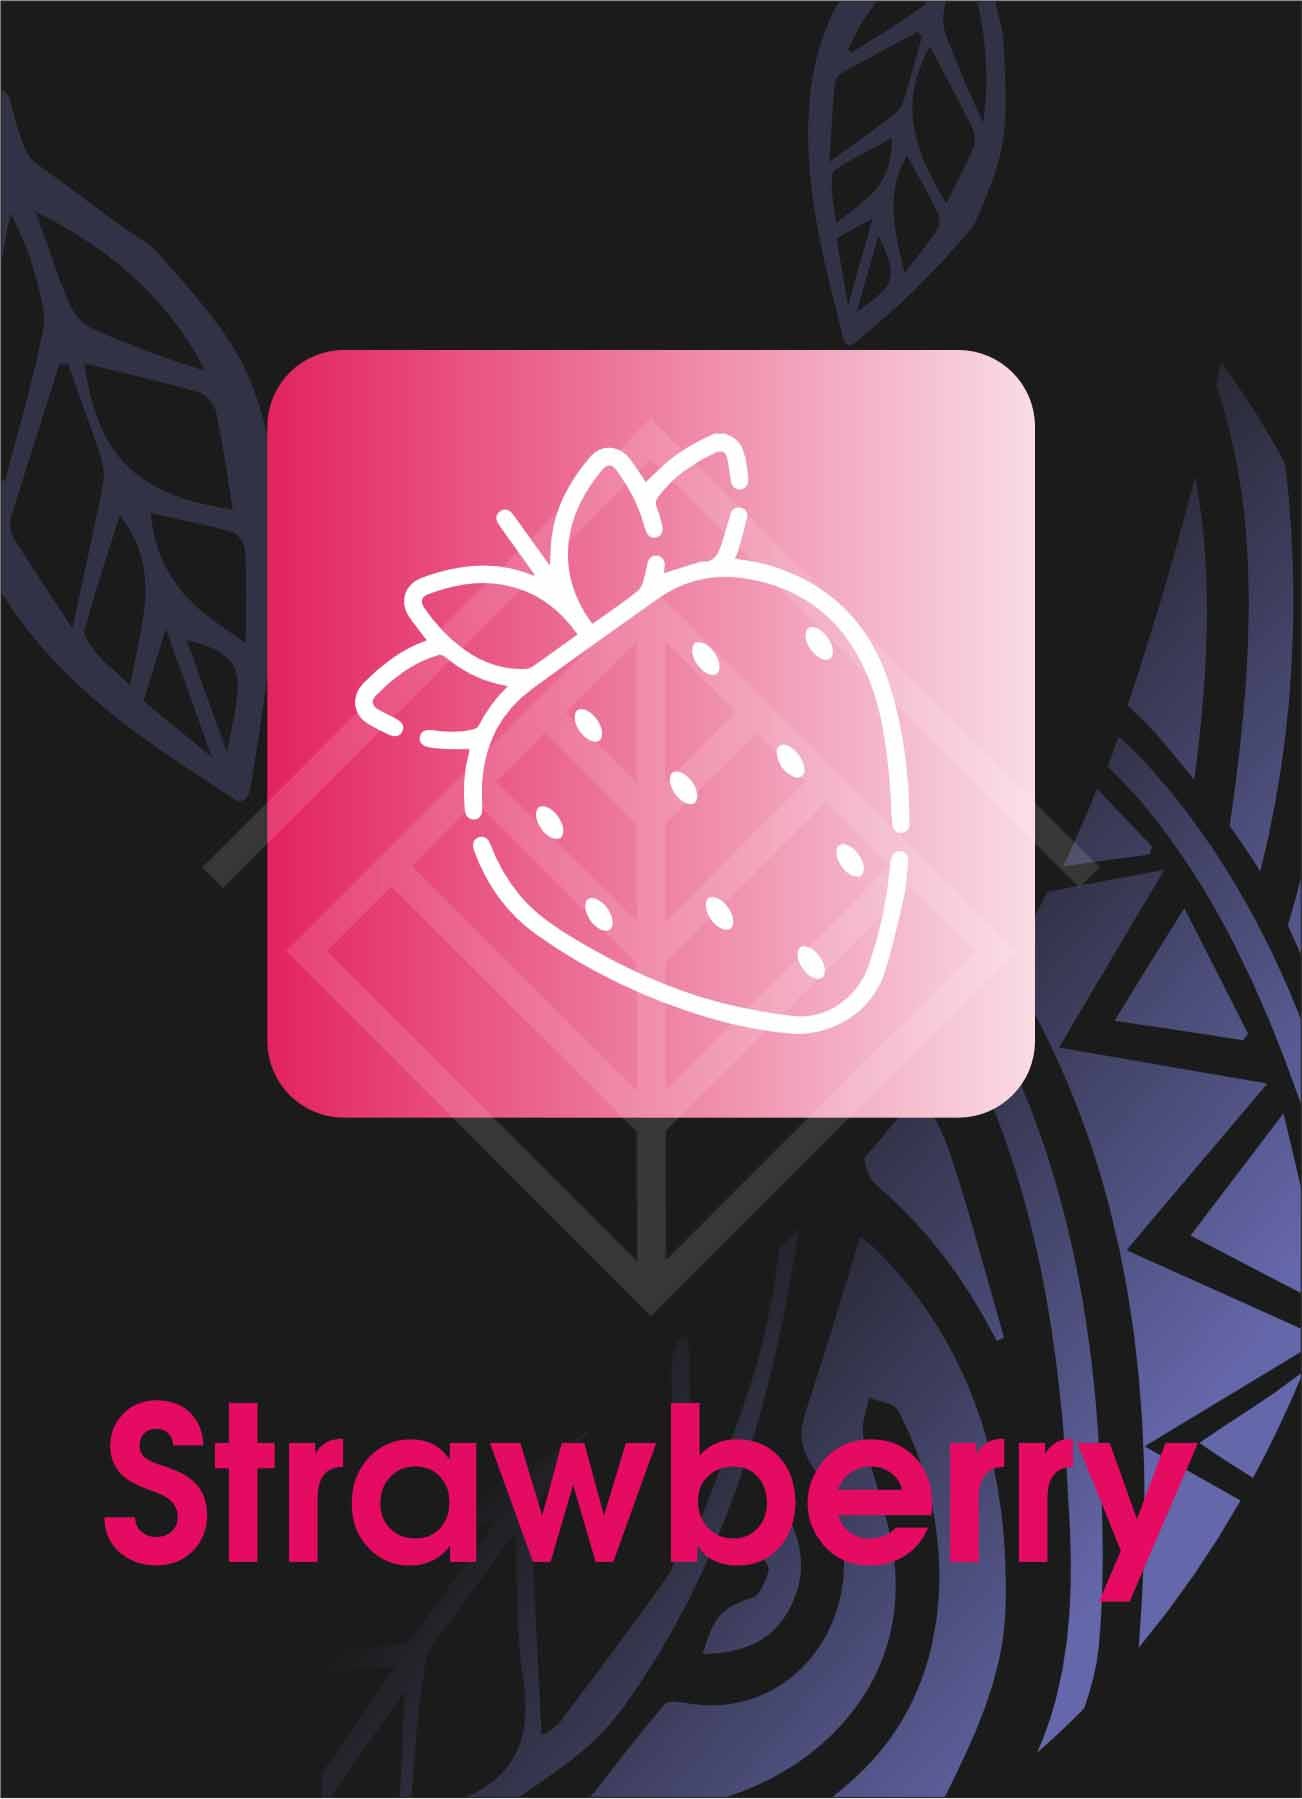 Strawberry (Stra)